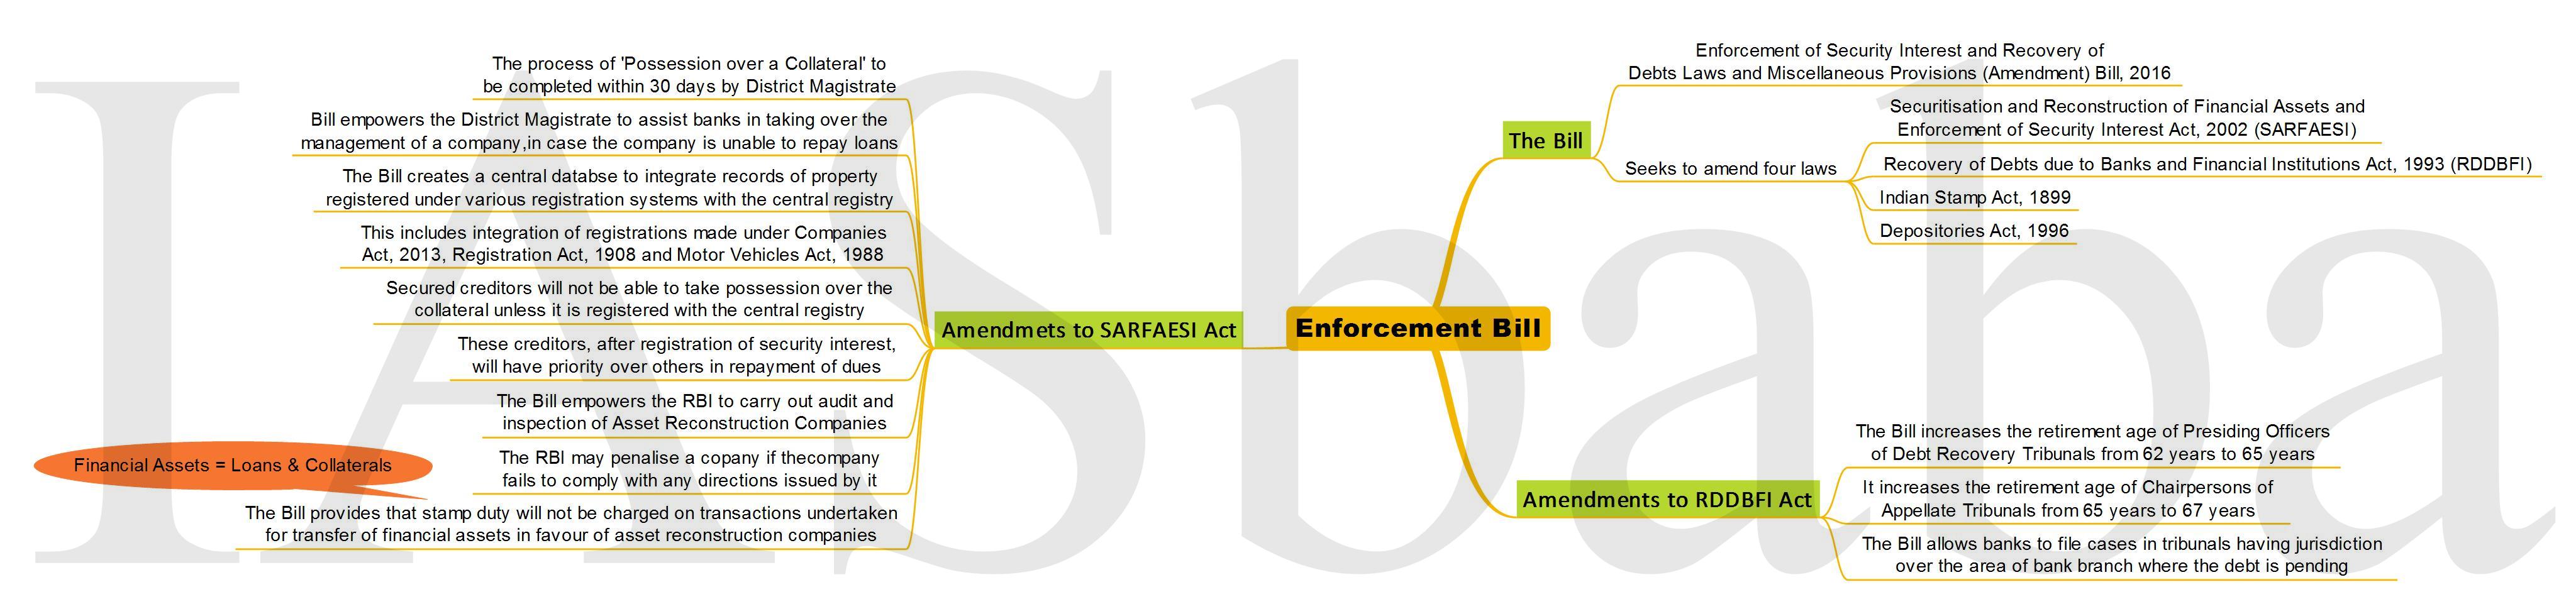 Enforcement Bill-IASbaba